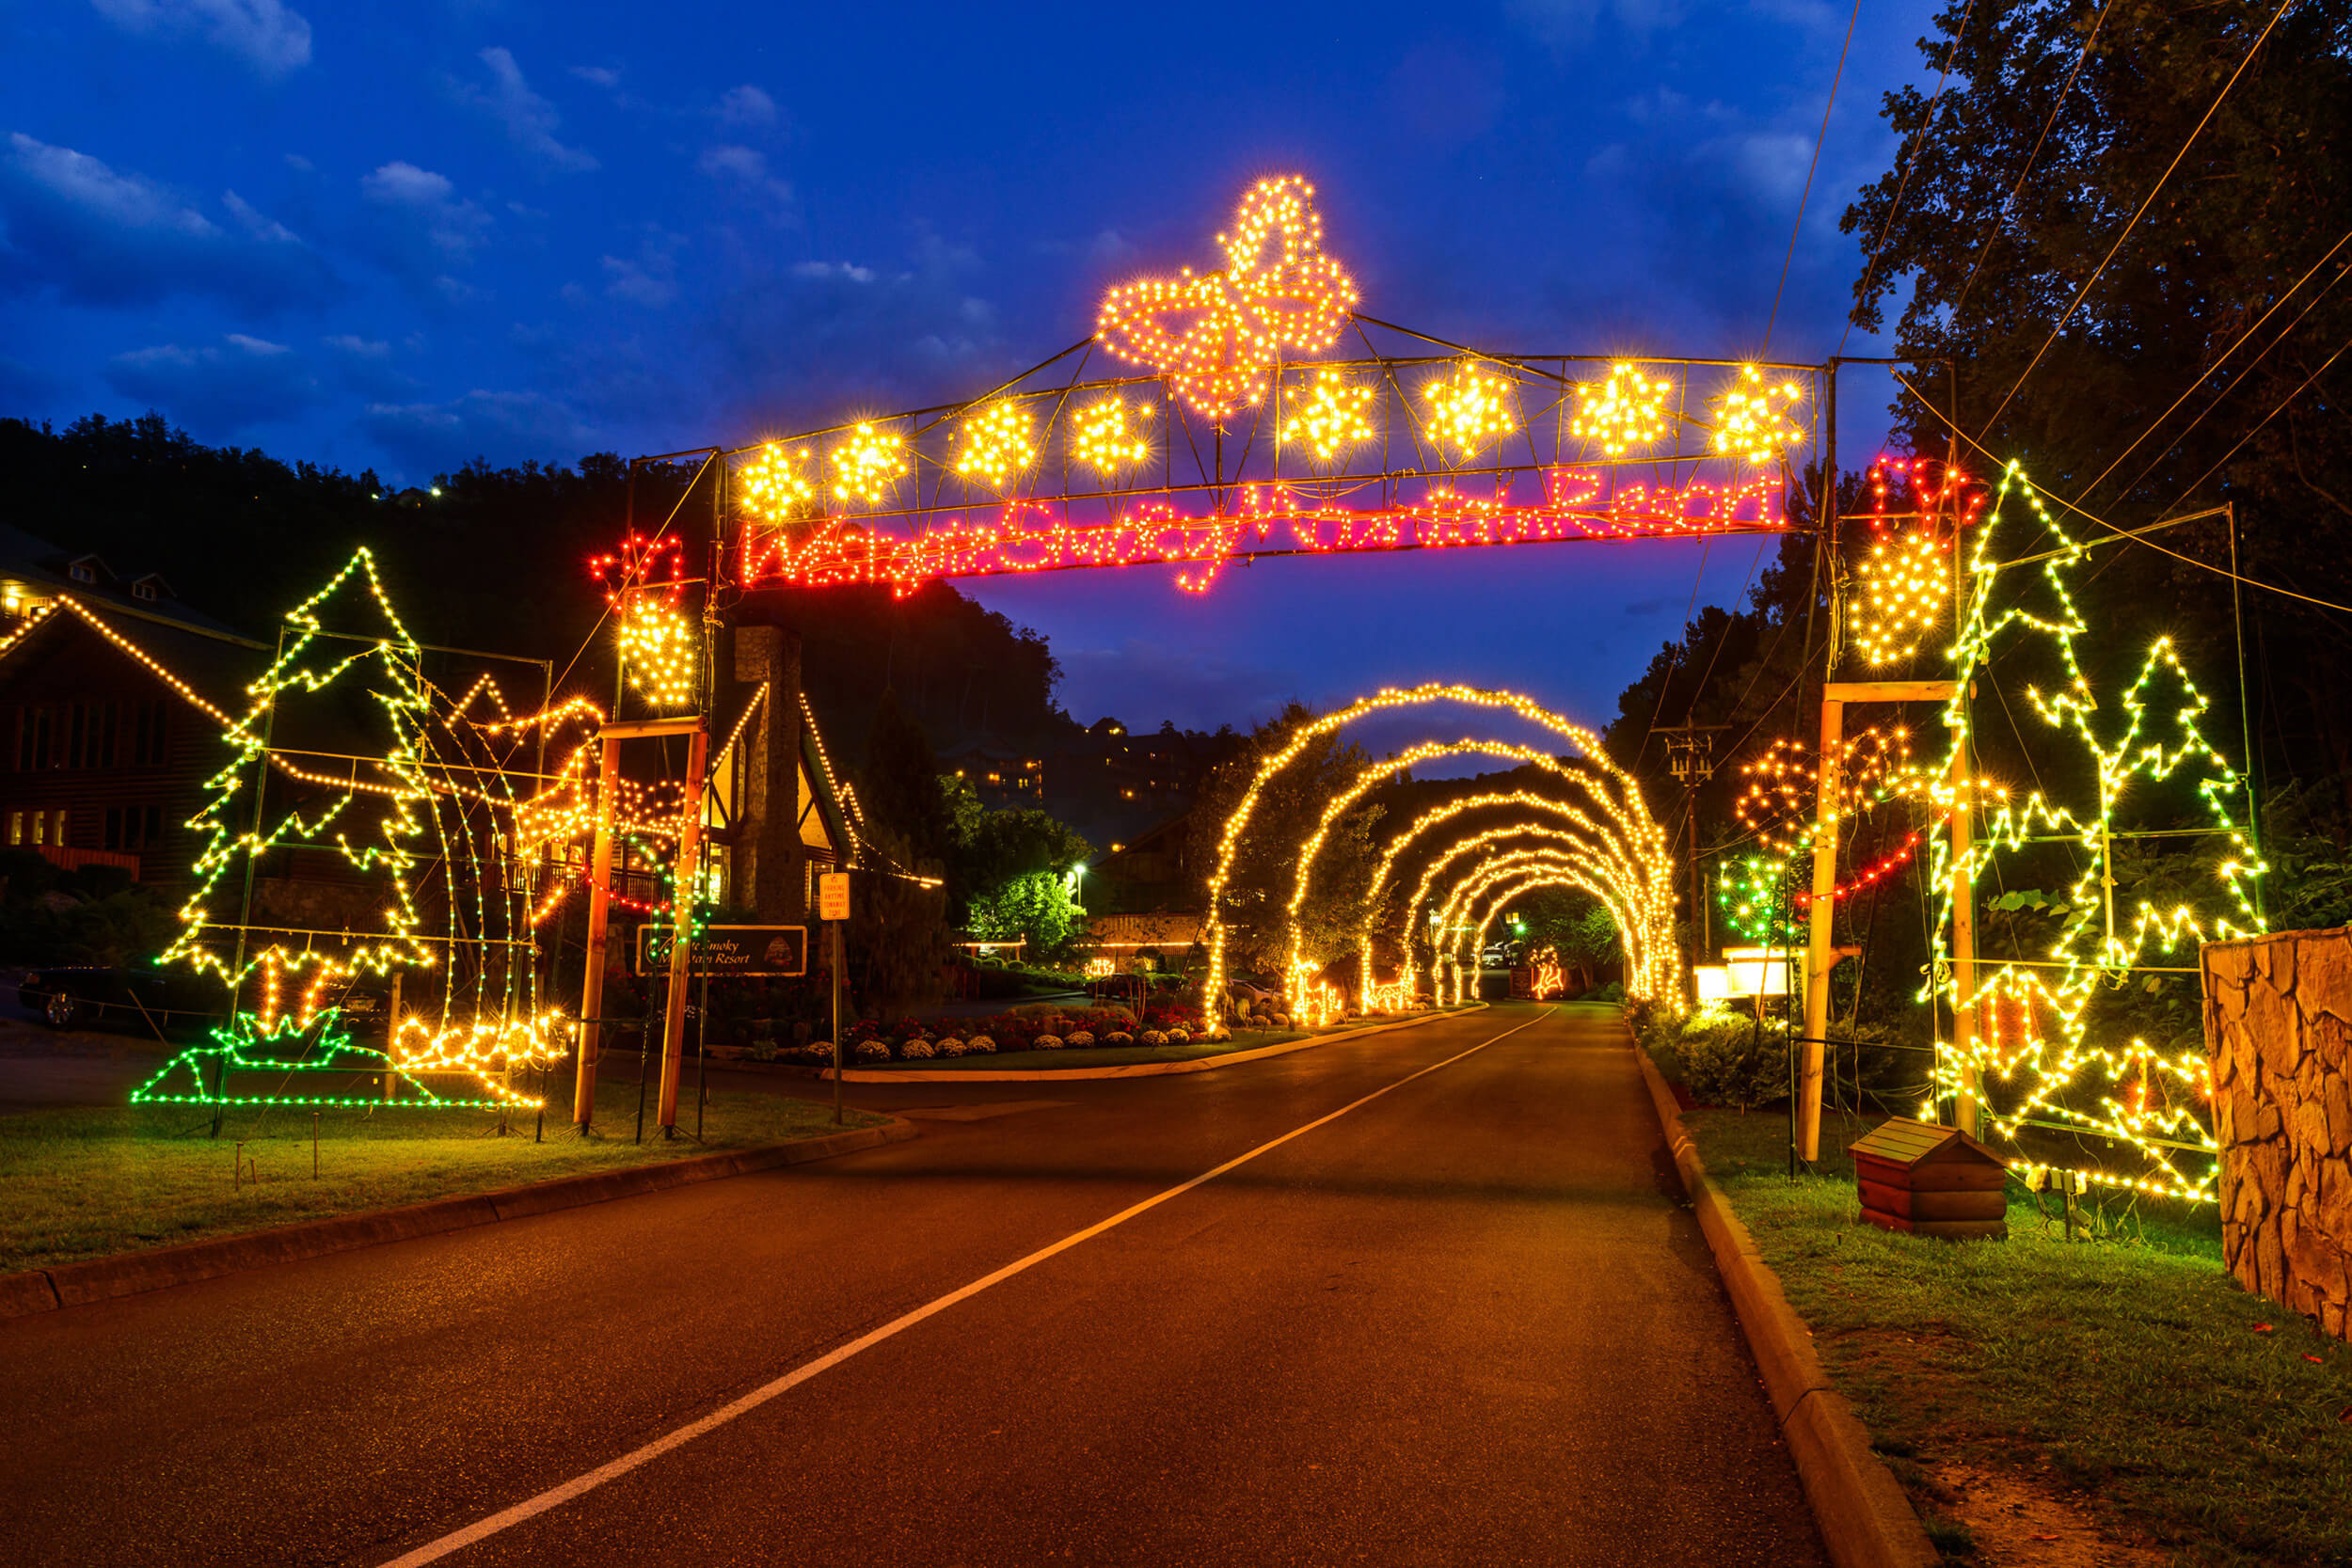 Resort entrance lit up for winter holidays | Westgate Smoky Mountain Resort & Spa